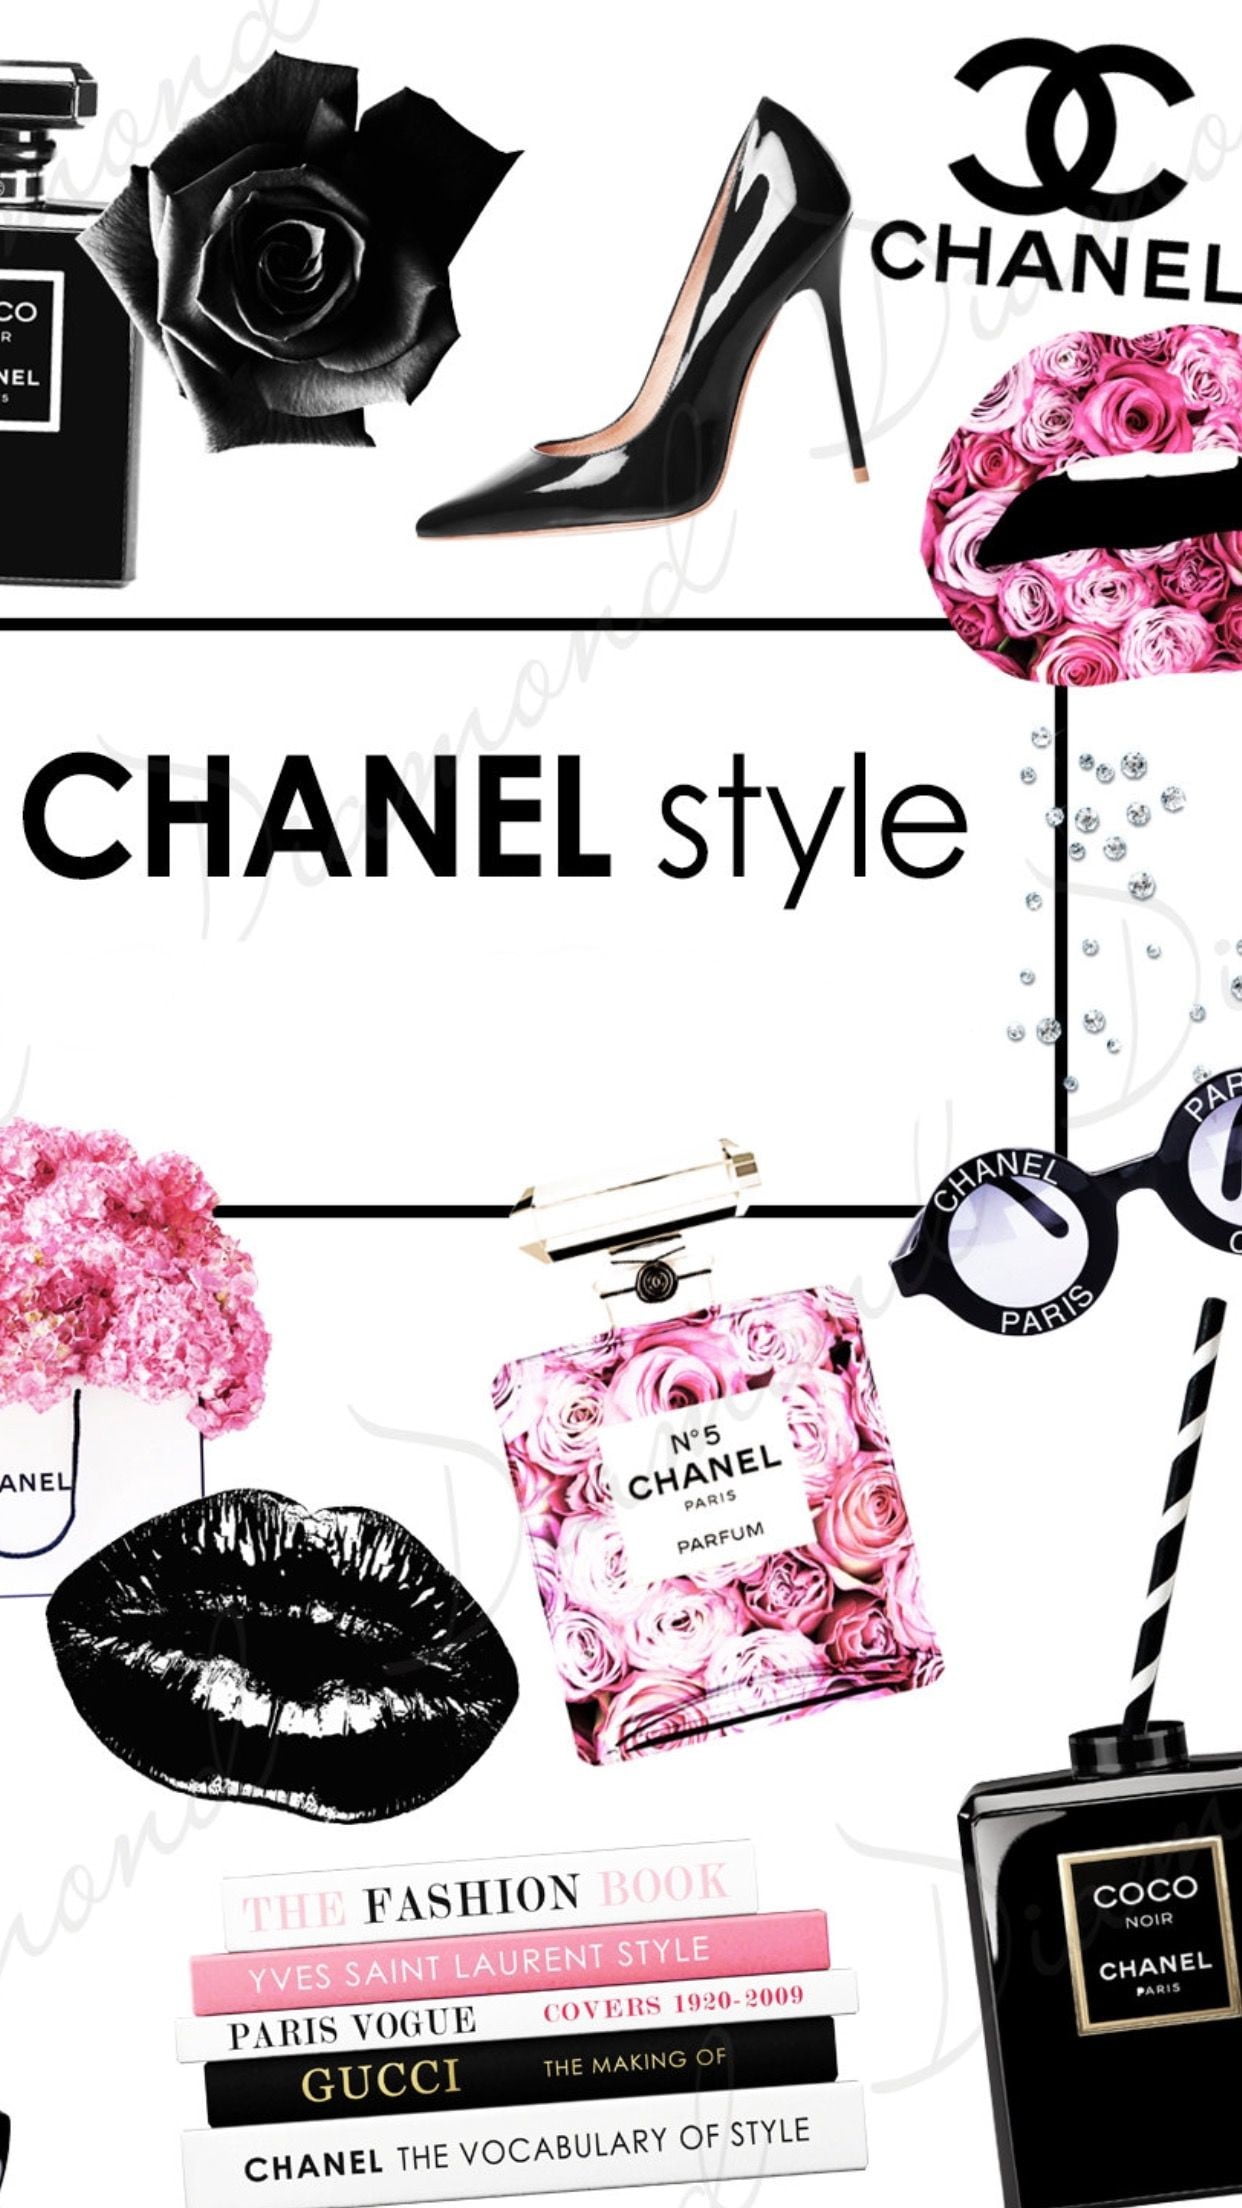 Bestpixtajpwo1m 最も好ましい Chanel 壁紙 画像 1248 壁紙 Chanel 画像 ピンク